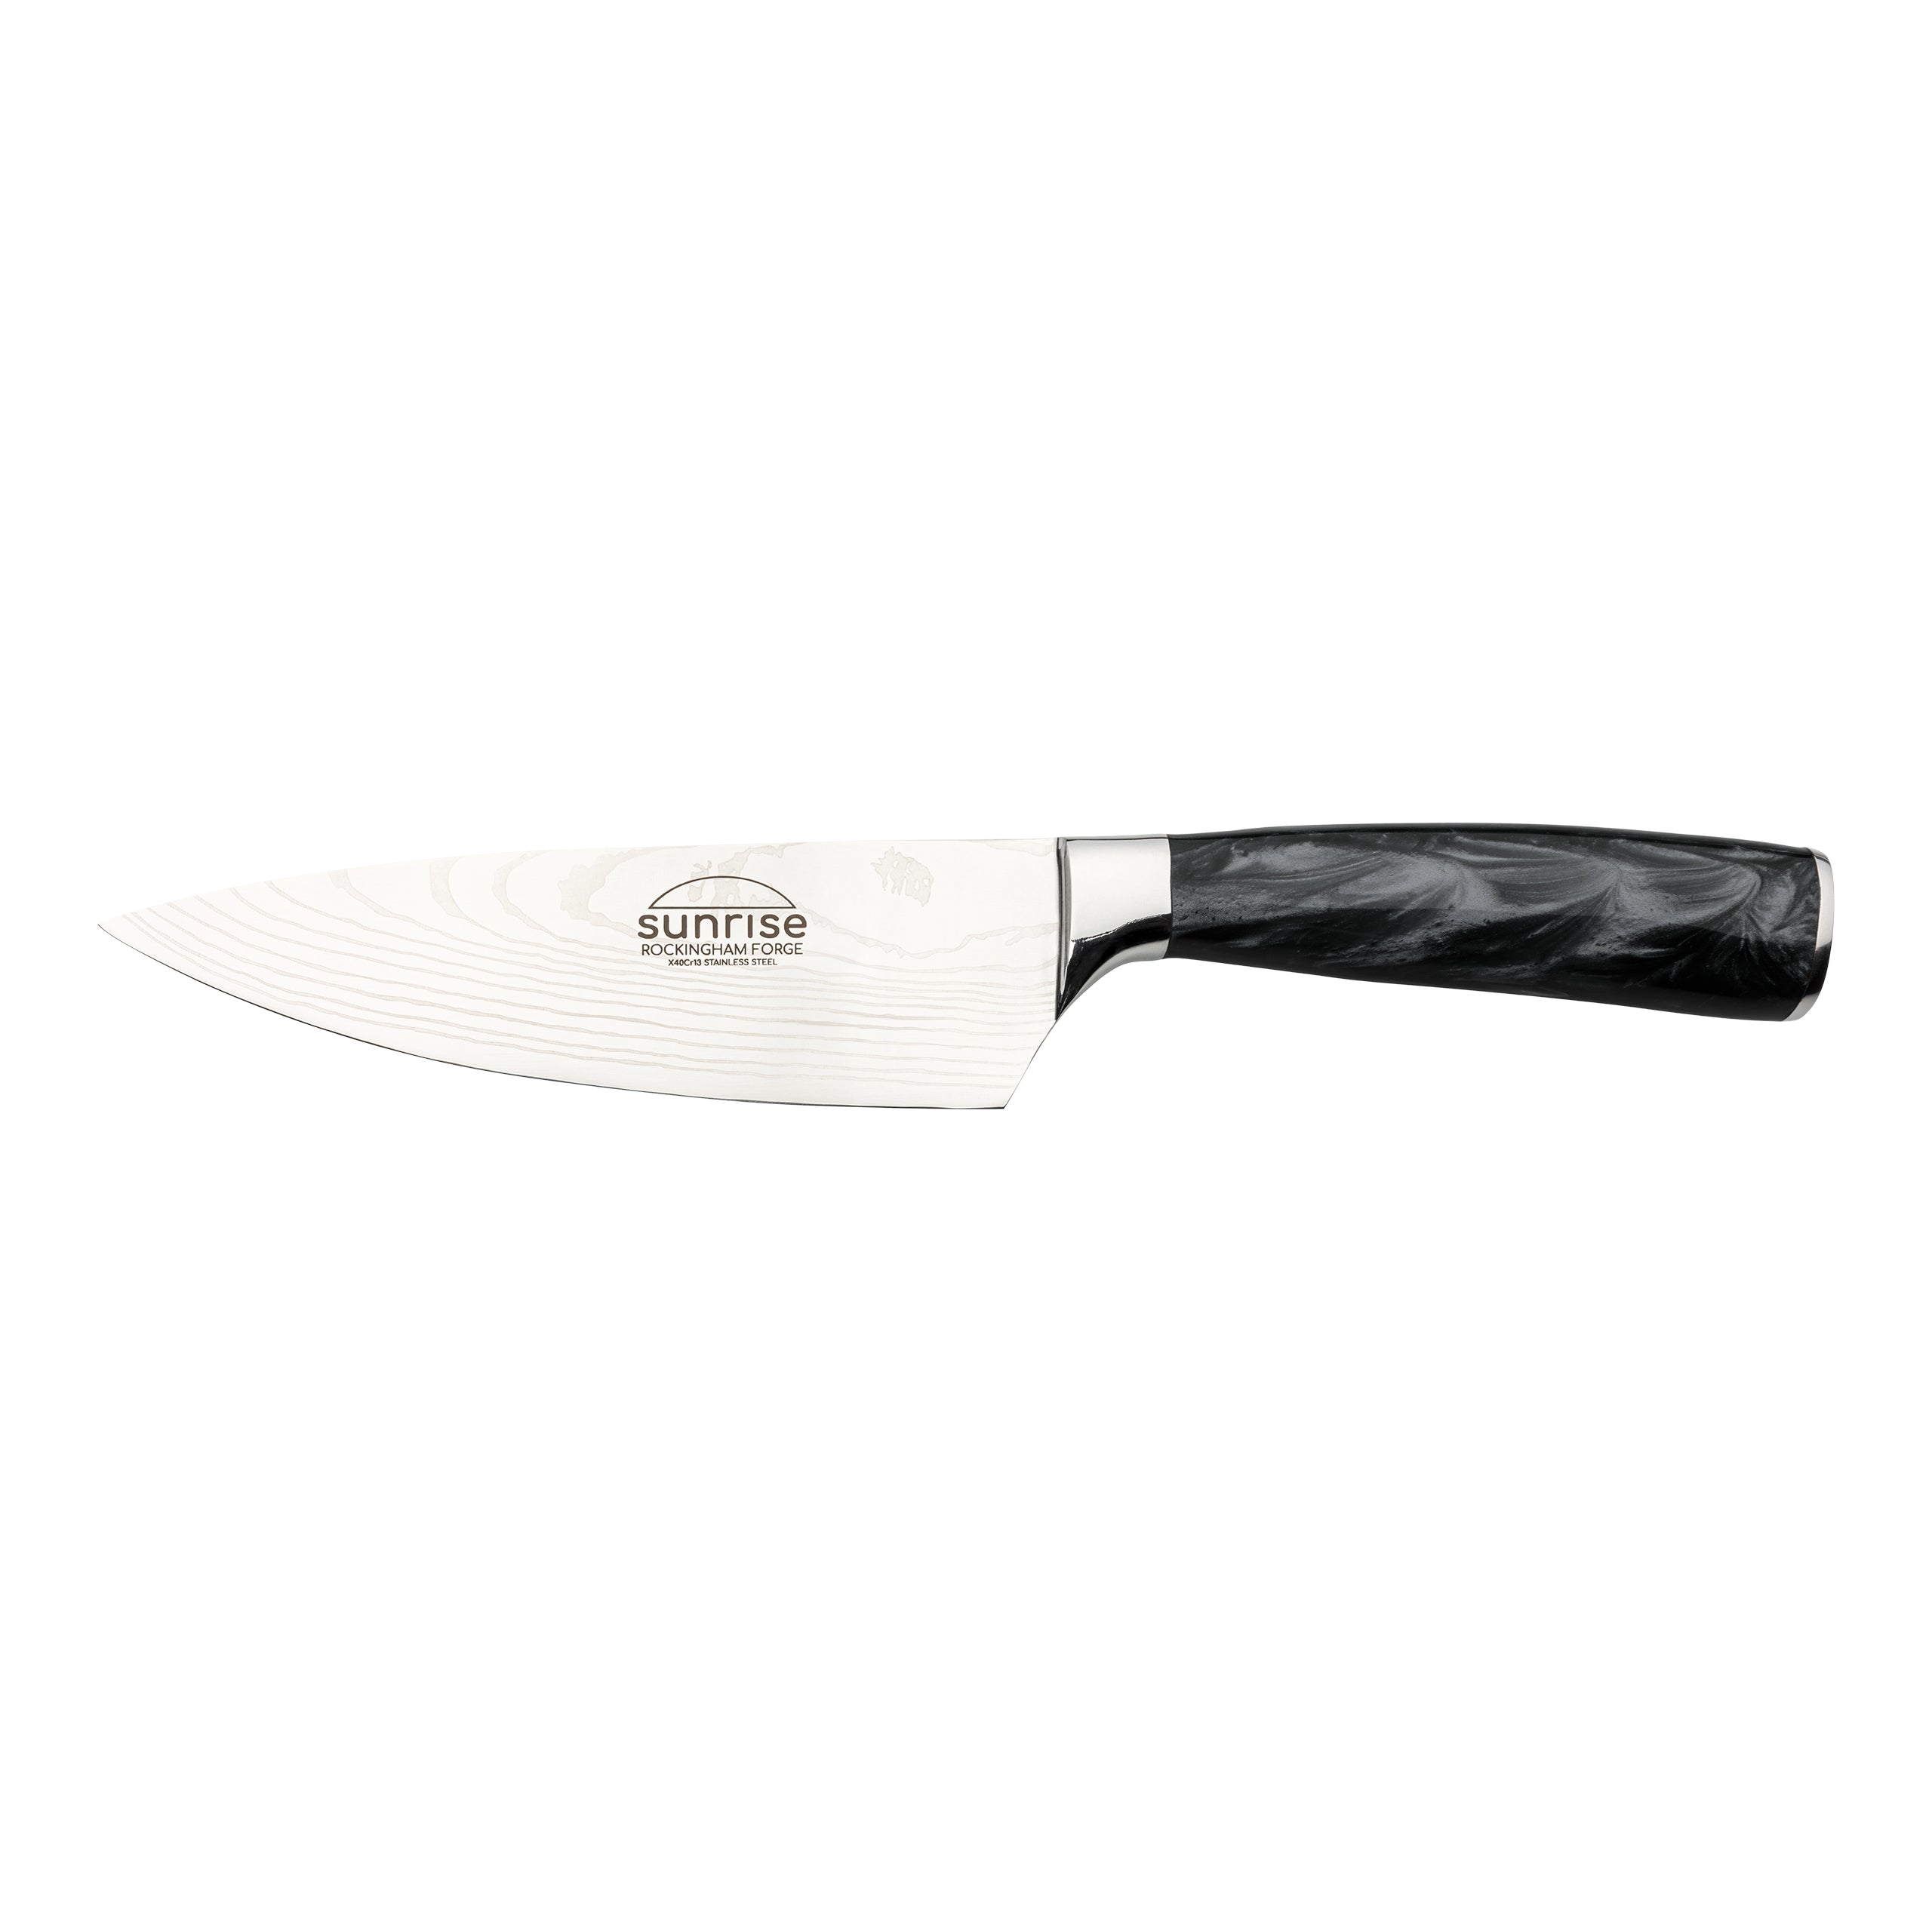 15cm Chef's Knife